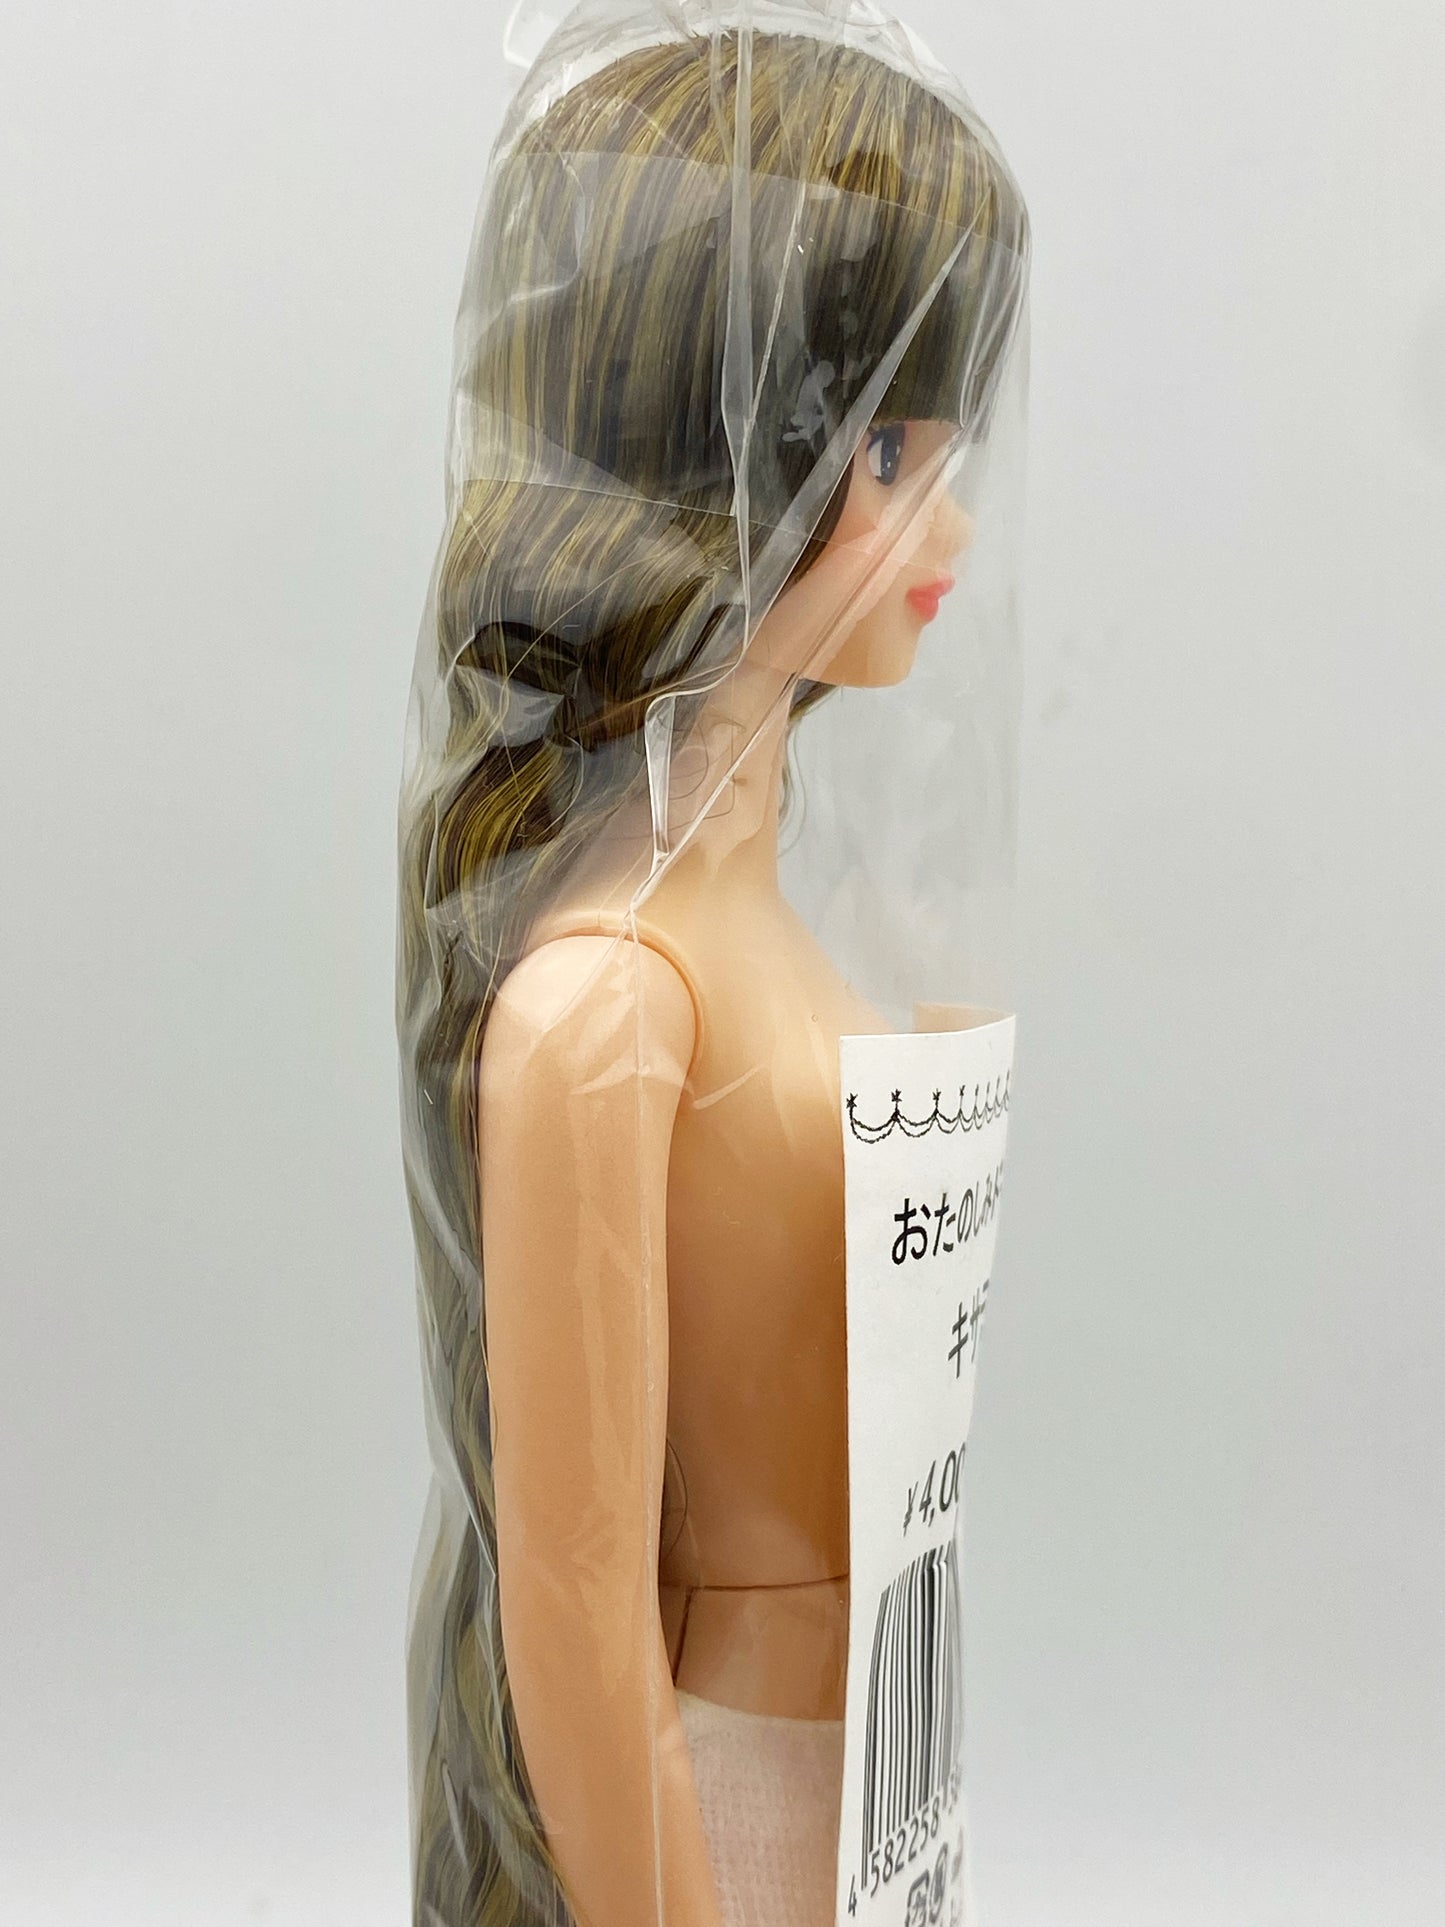 Takara Licca Jenny Kisara Castle Doll Japanese 1/6 nude RARE figure